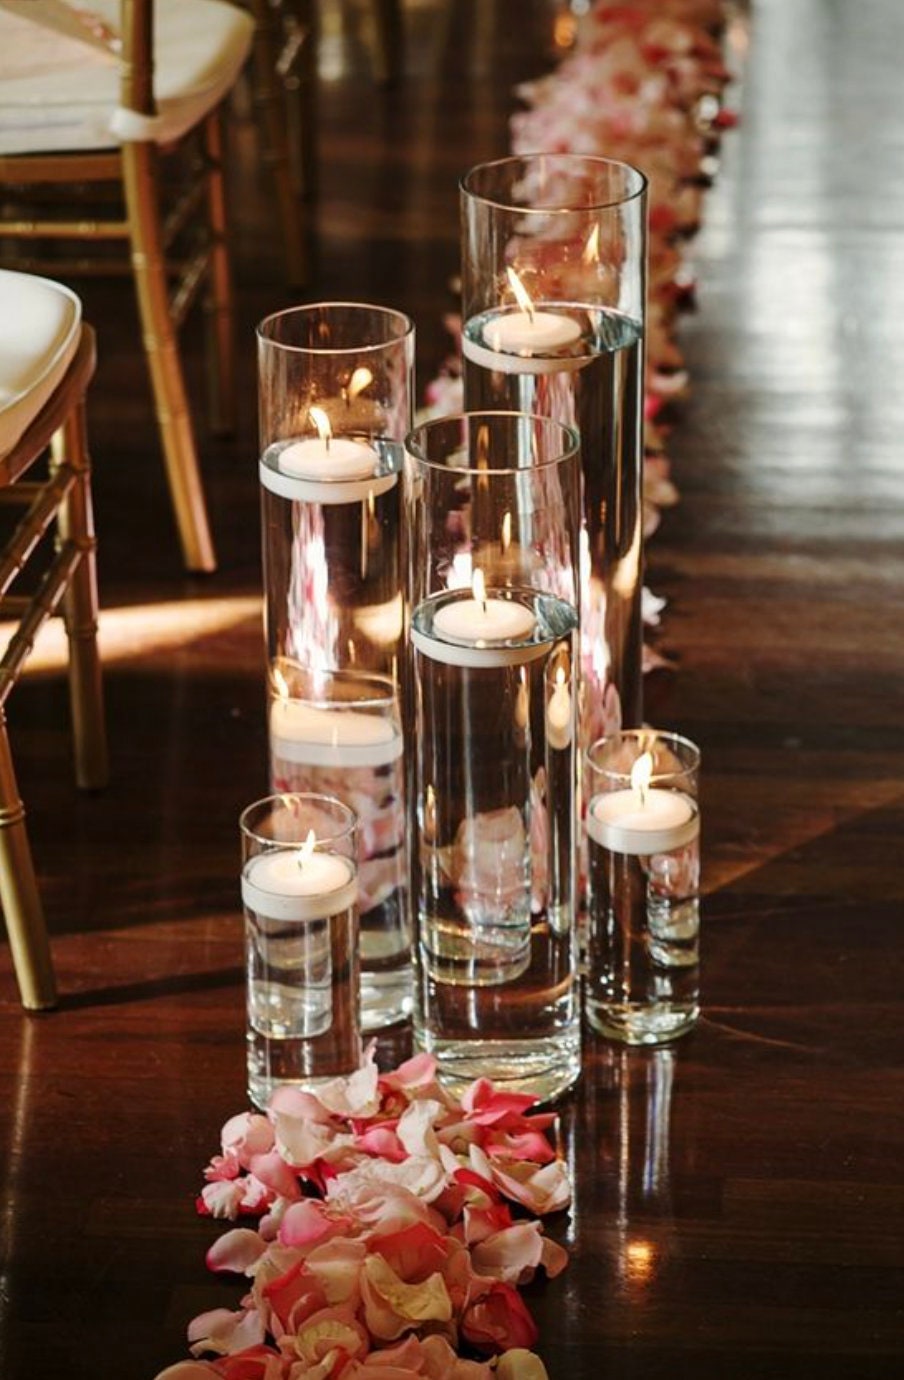 6 Cylinder Glass Vases Hurricane Vase Wholesale Centerpieces Table Decorations Event Wedding Reception Aisle Decor Candle Holders Free Ship